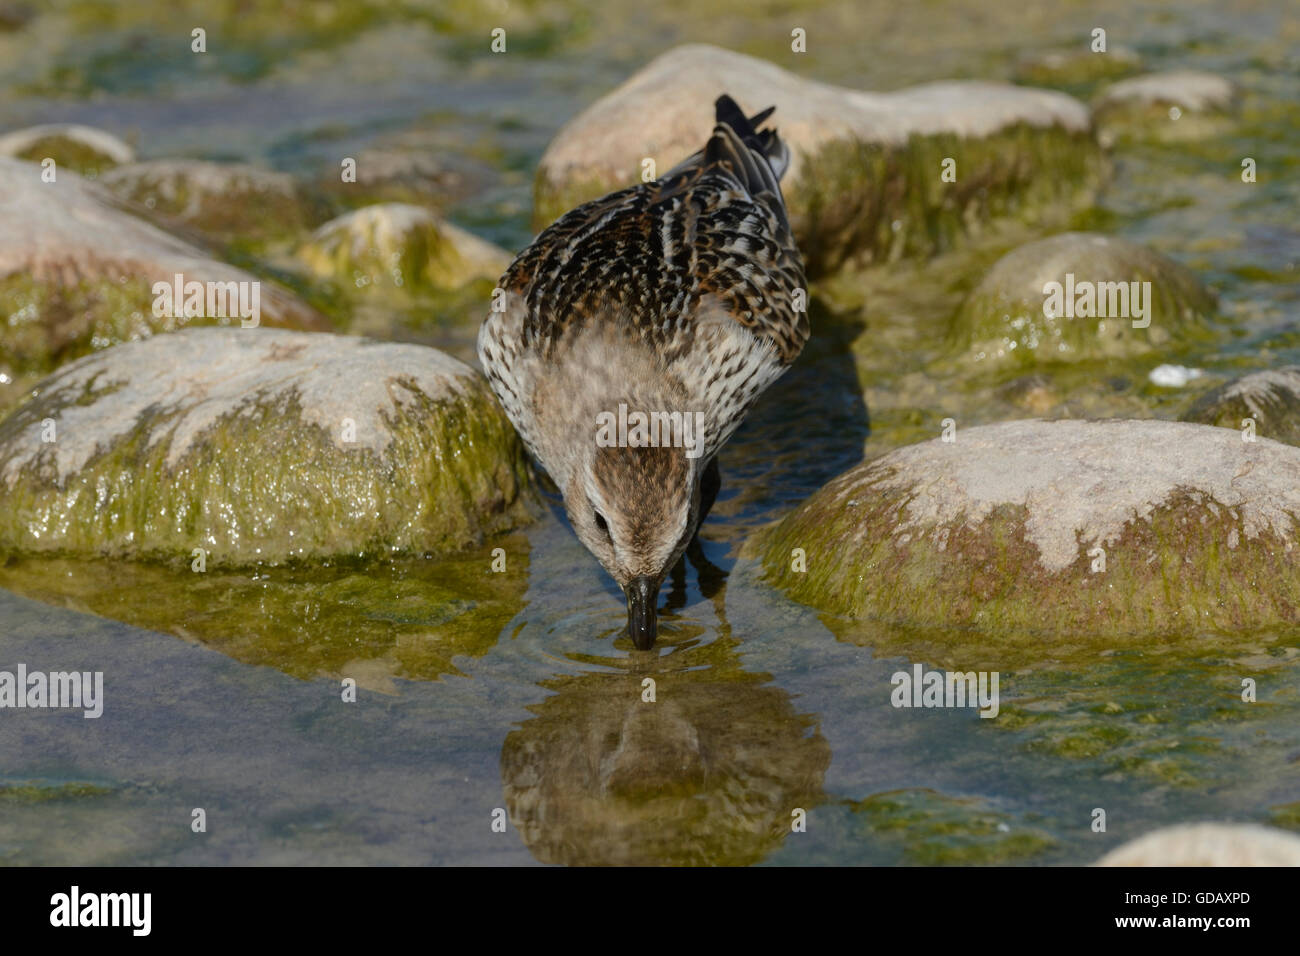 Dunlin,Calidris alpina,Scolopacidae,wader,bird,animal,Stampf,Jona,Canton of St. Gall,Switzerland Stock Photo